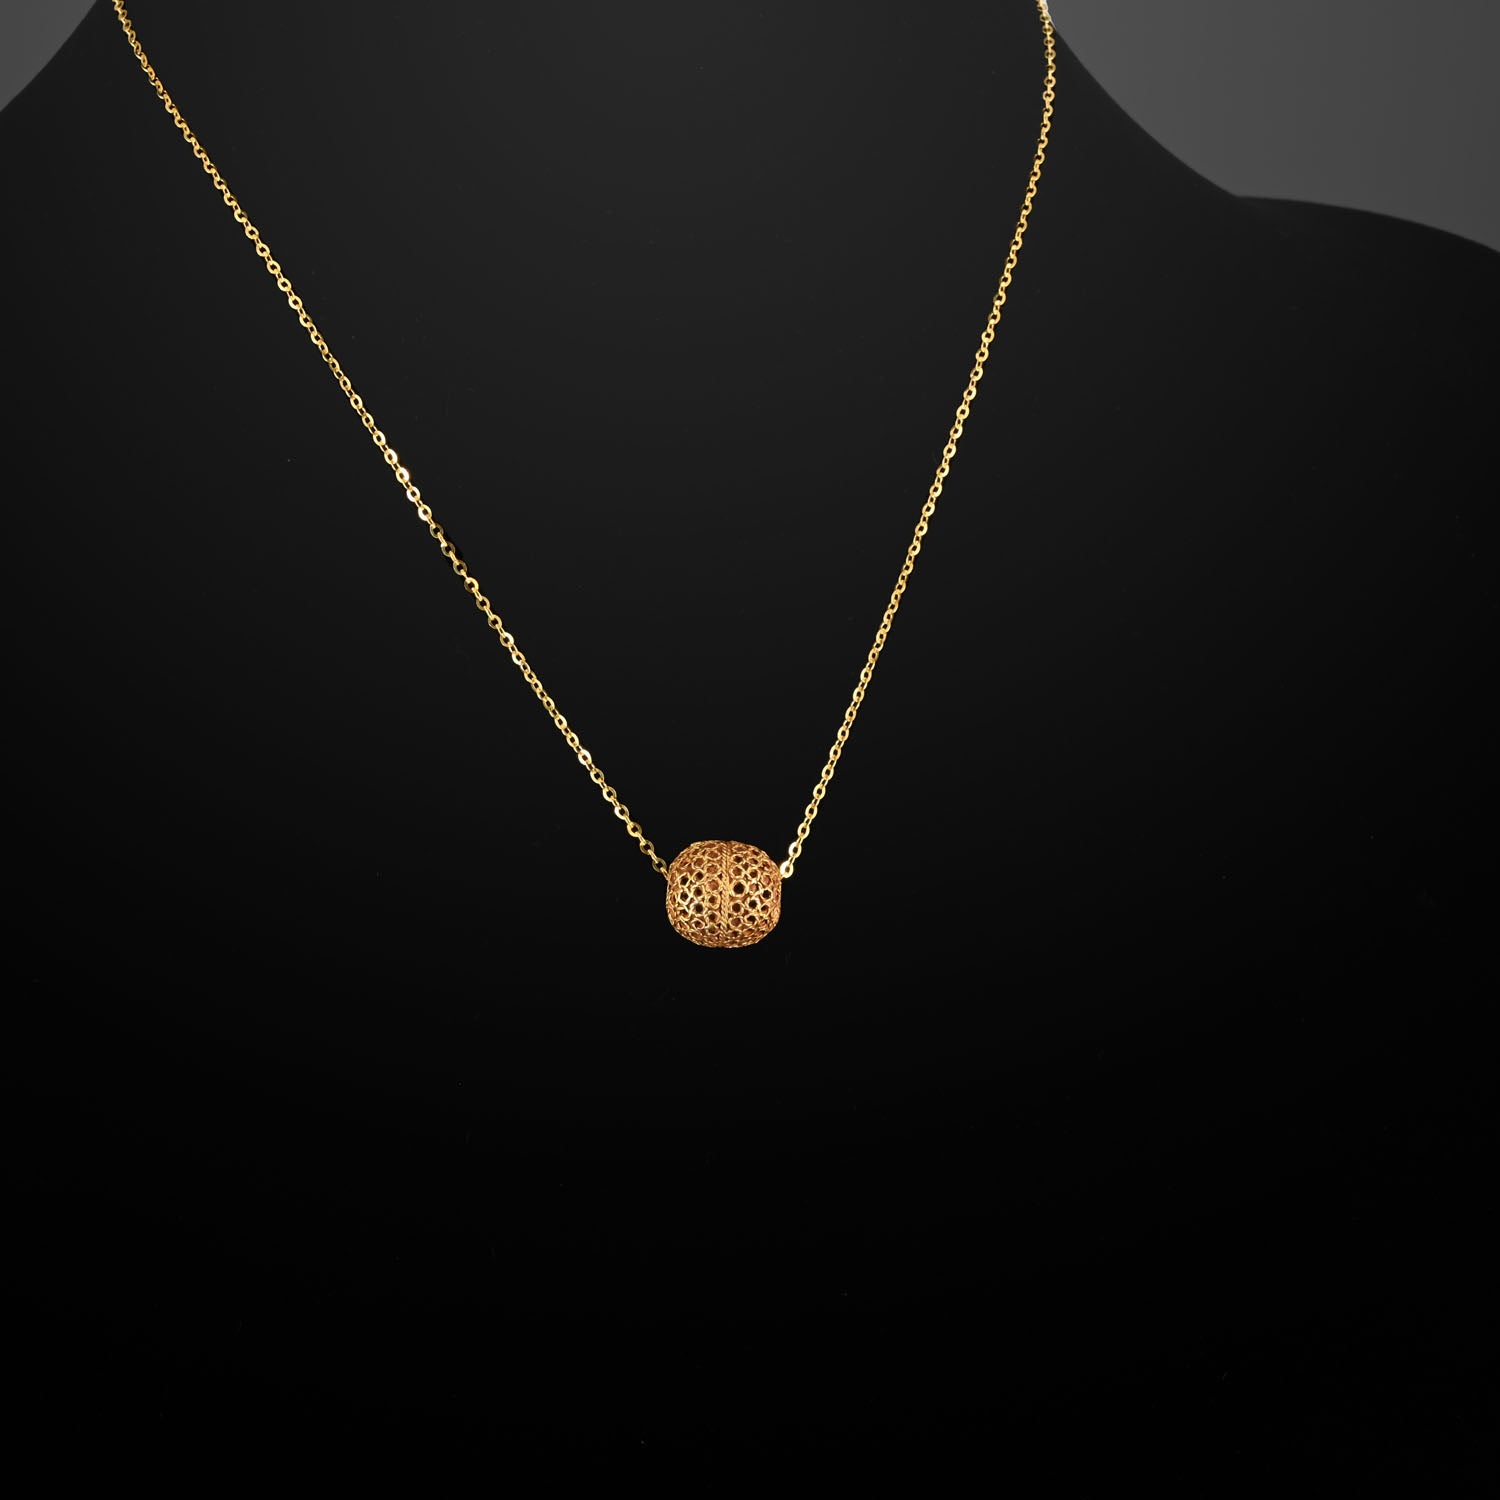 An Islamic Gold Bead Pendant Necklace, Fatimid Period. ca. 11th century CE